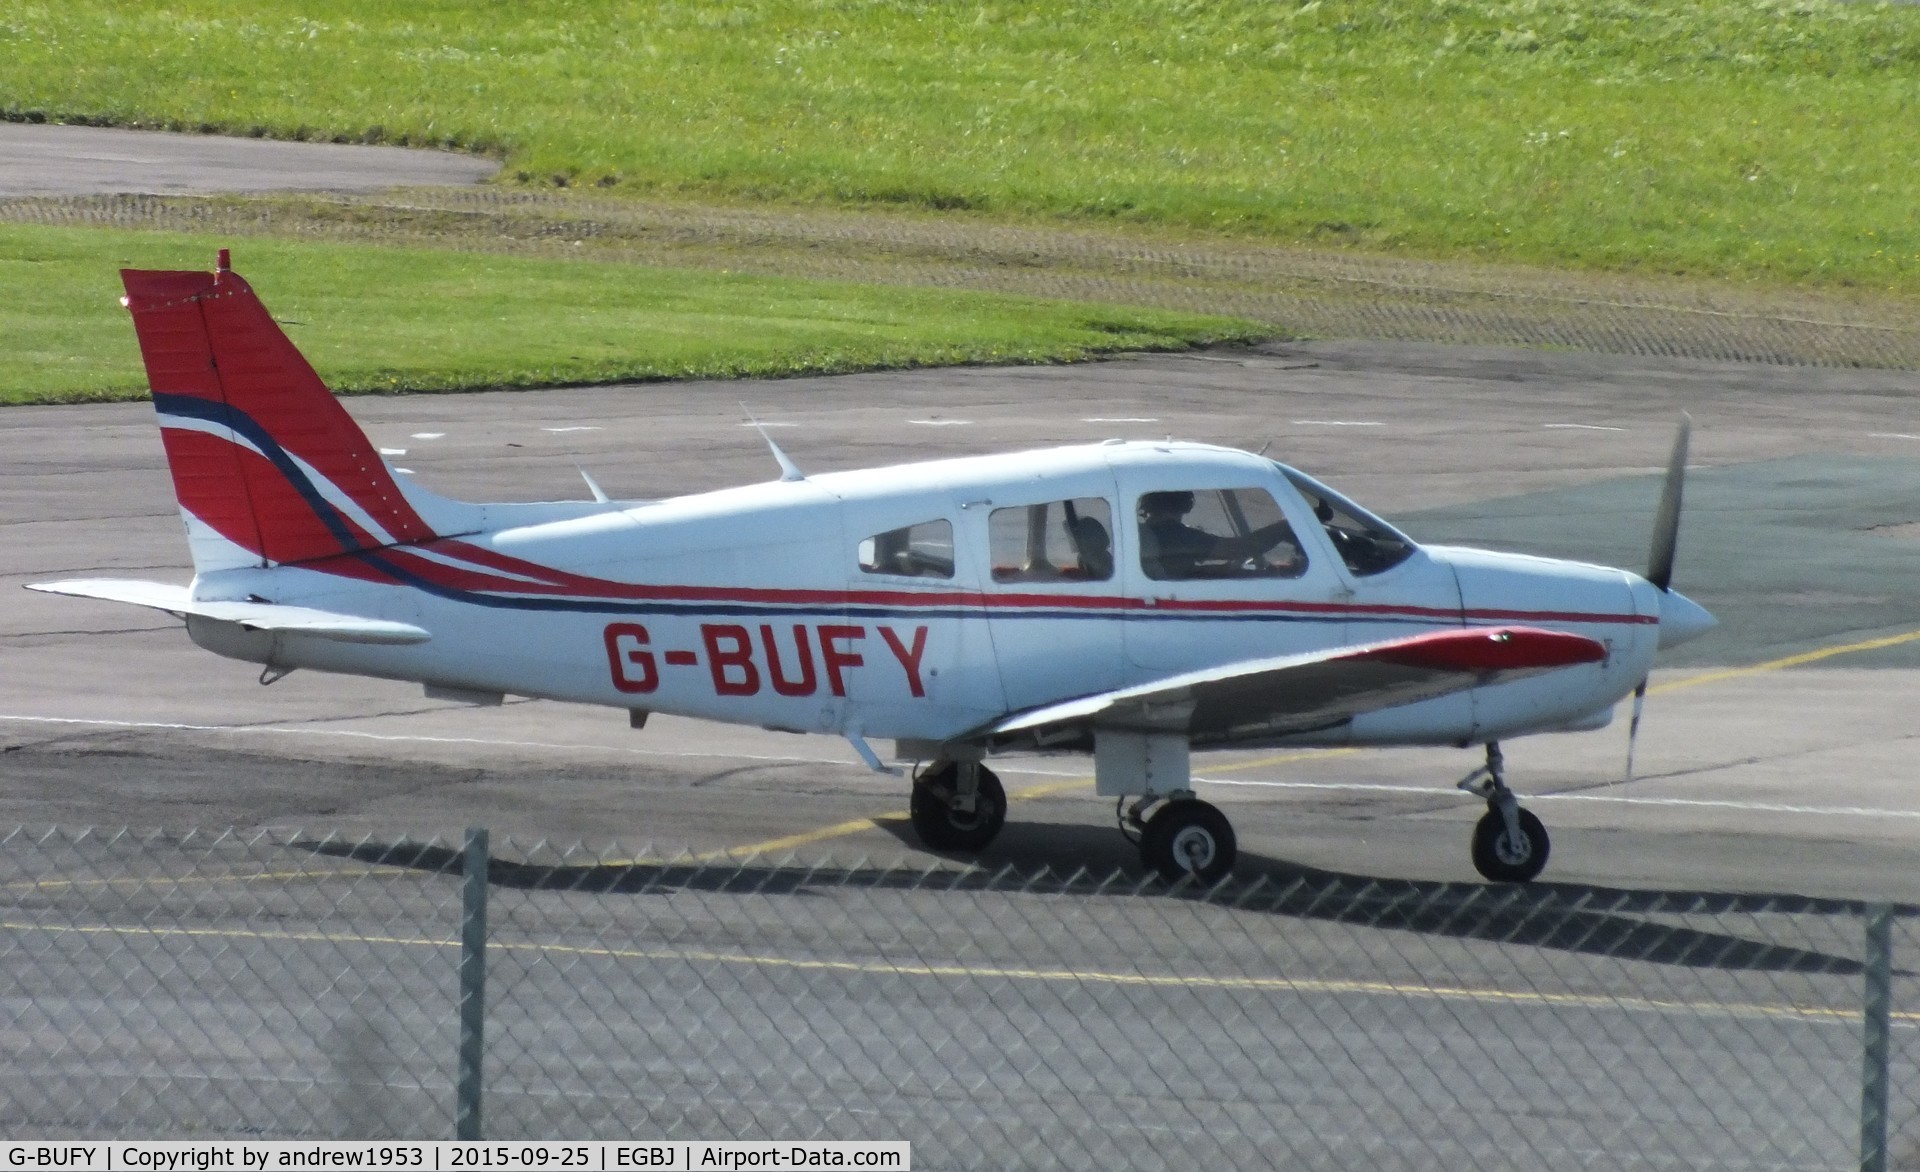 G-BUFY, 1980 Piper PA-28-161 Cherokee Warrior II C/N 28-8016211, G-BUFY at Gloucestershire Airport.